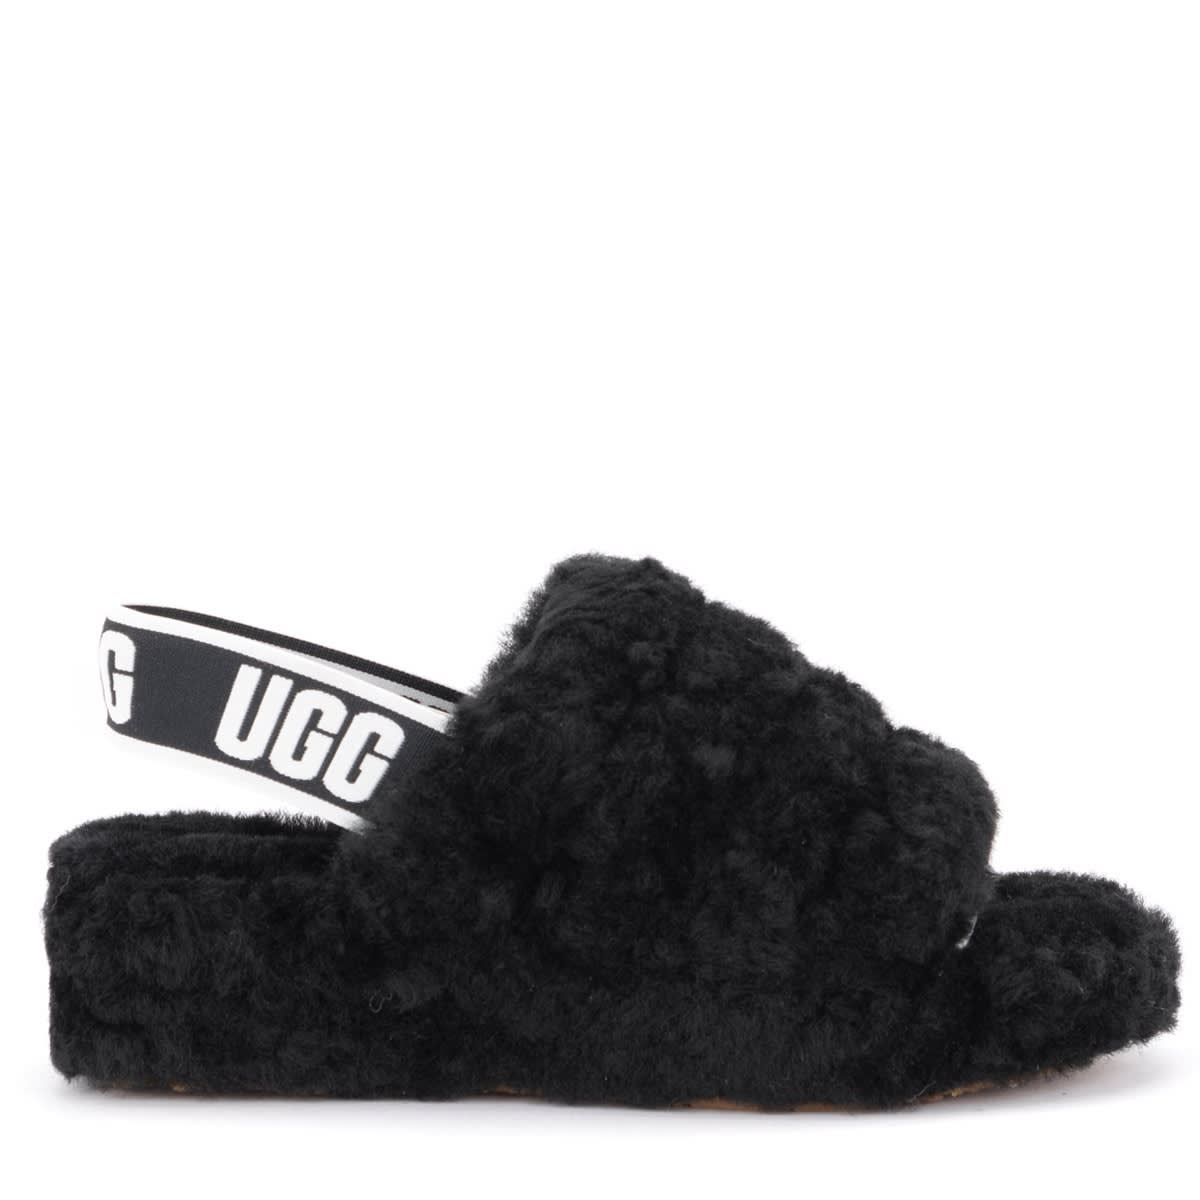 Ugg Fluff Yeah Sandal Slipper Made Of Soft Black Leather